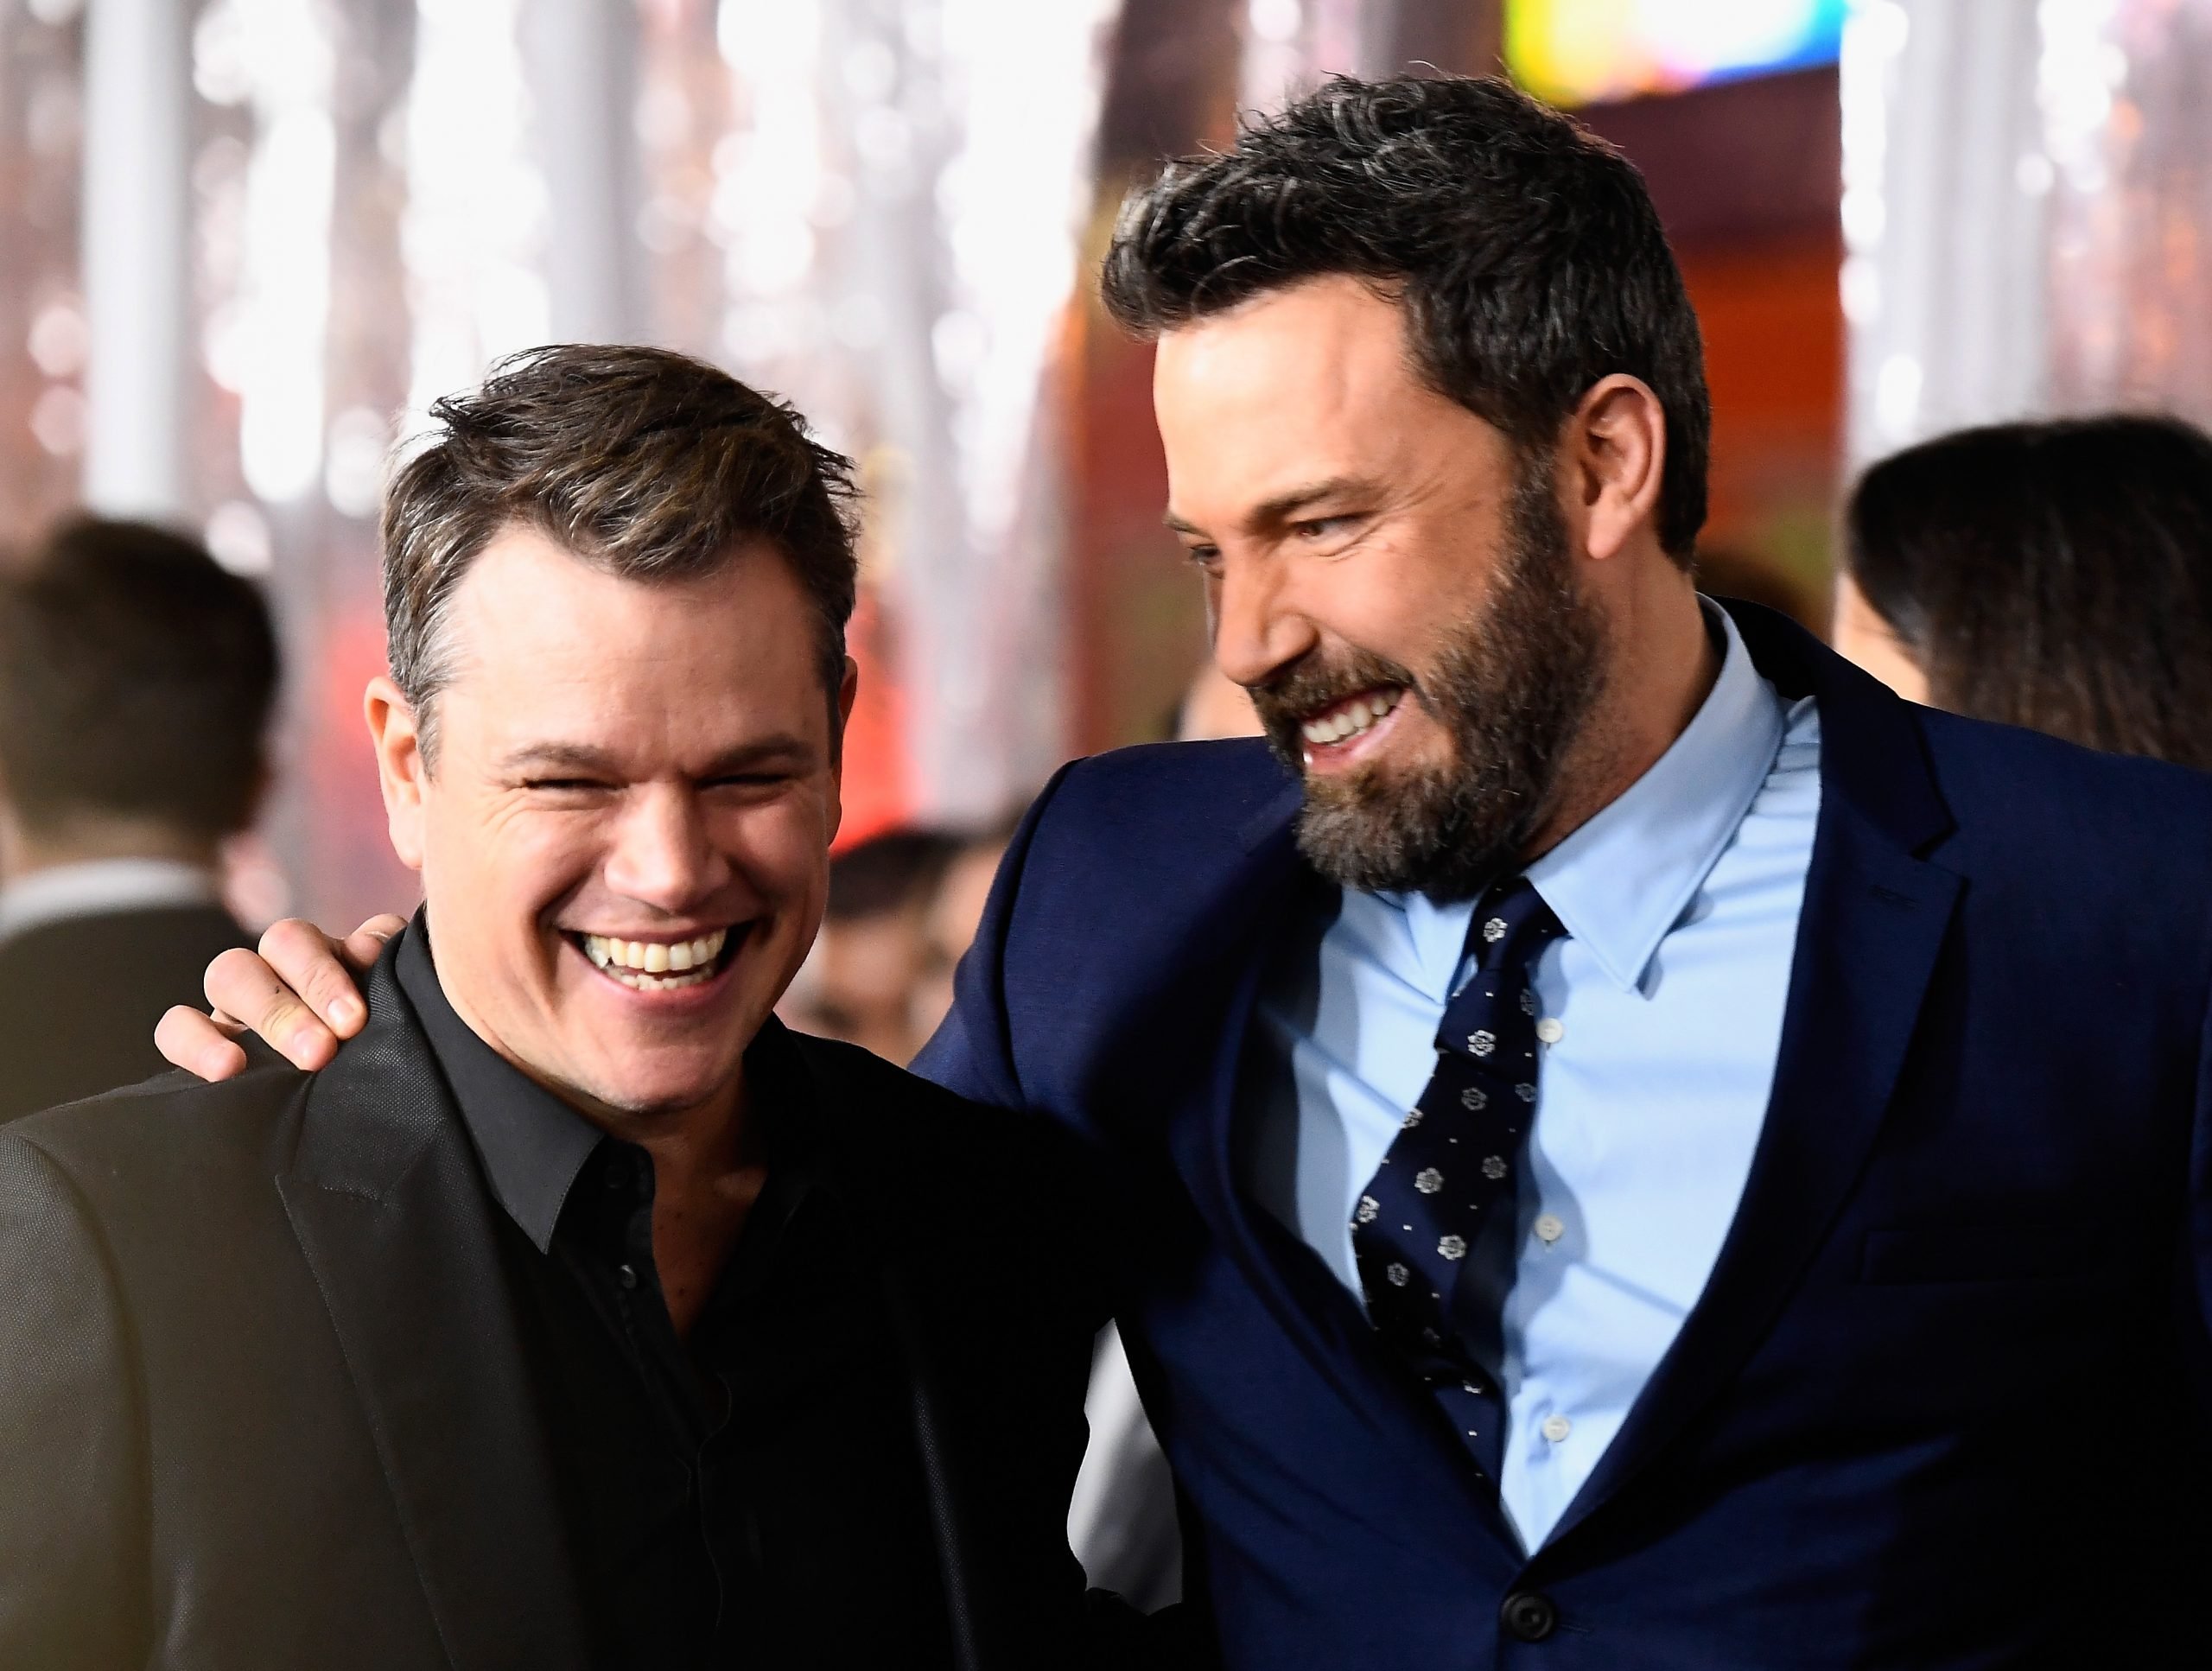 Ben Affleck puts his arm around Matt Damon